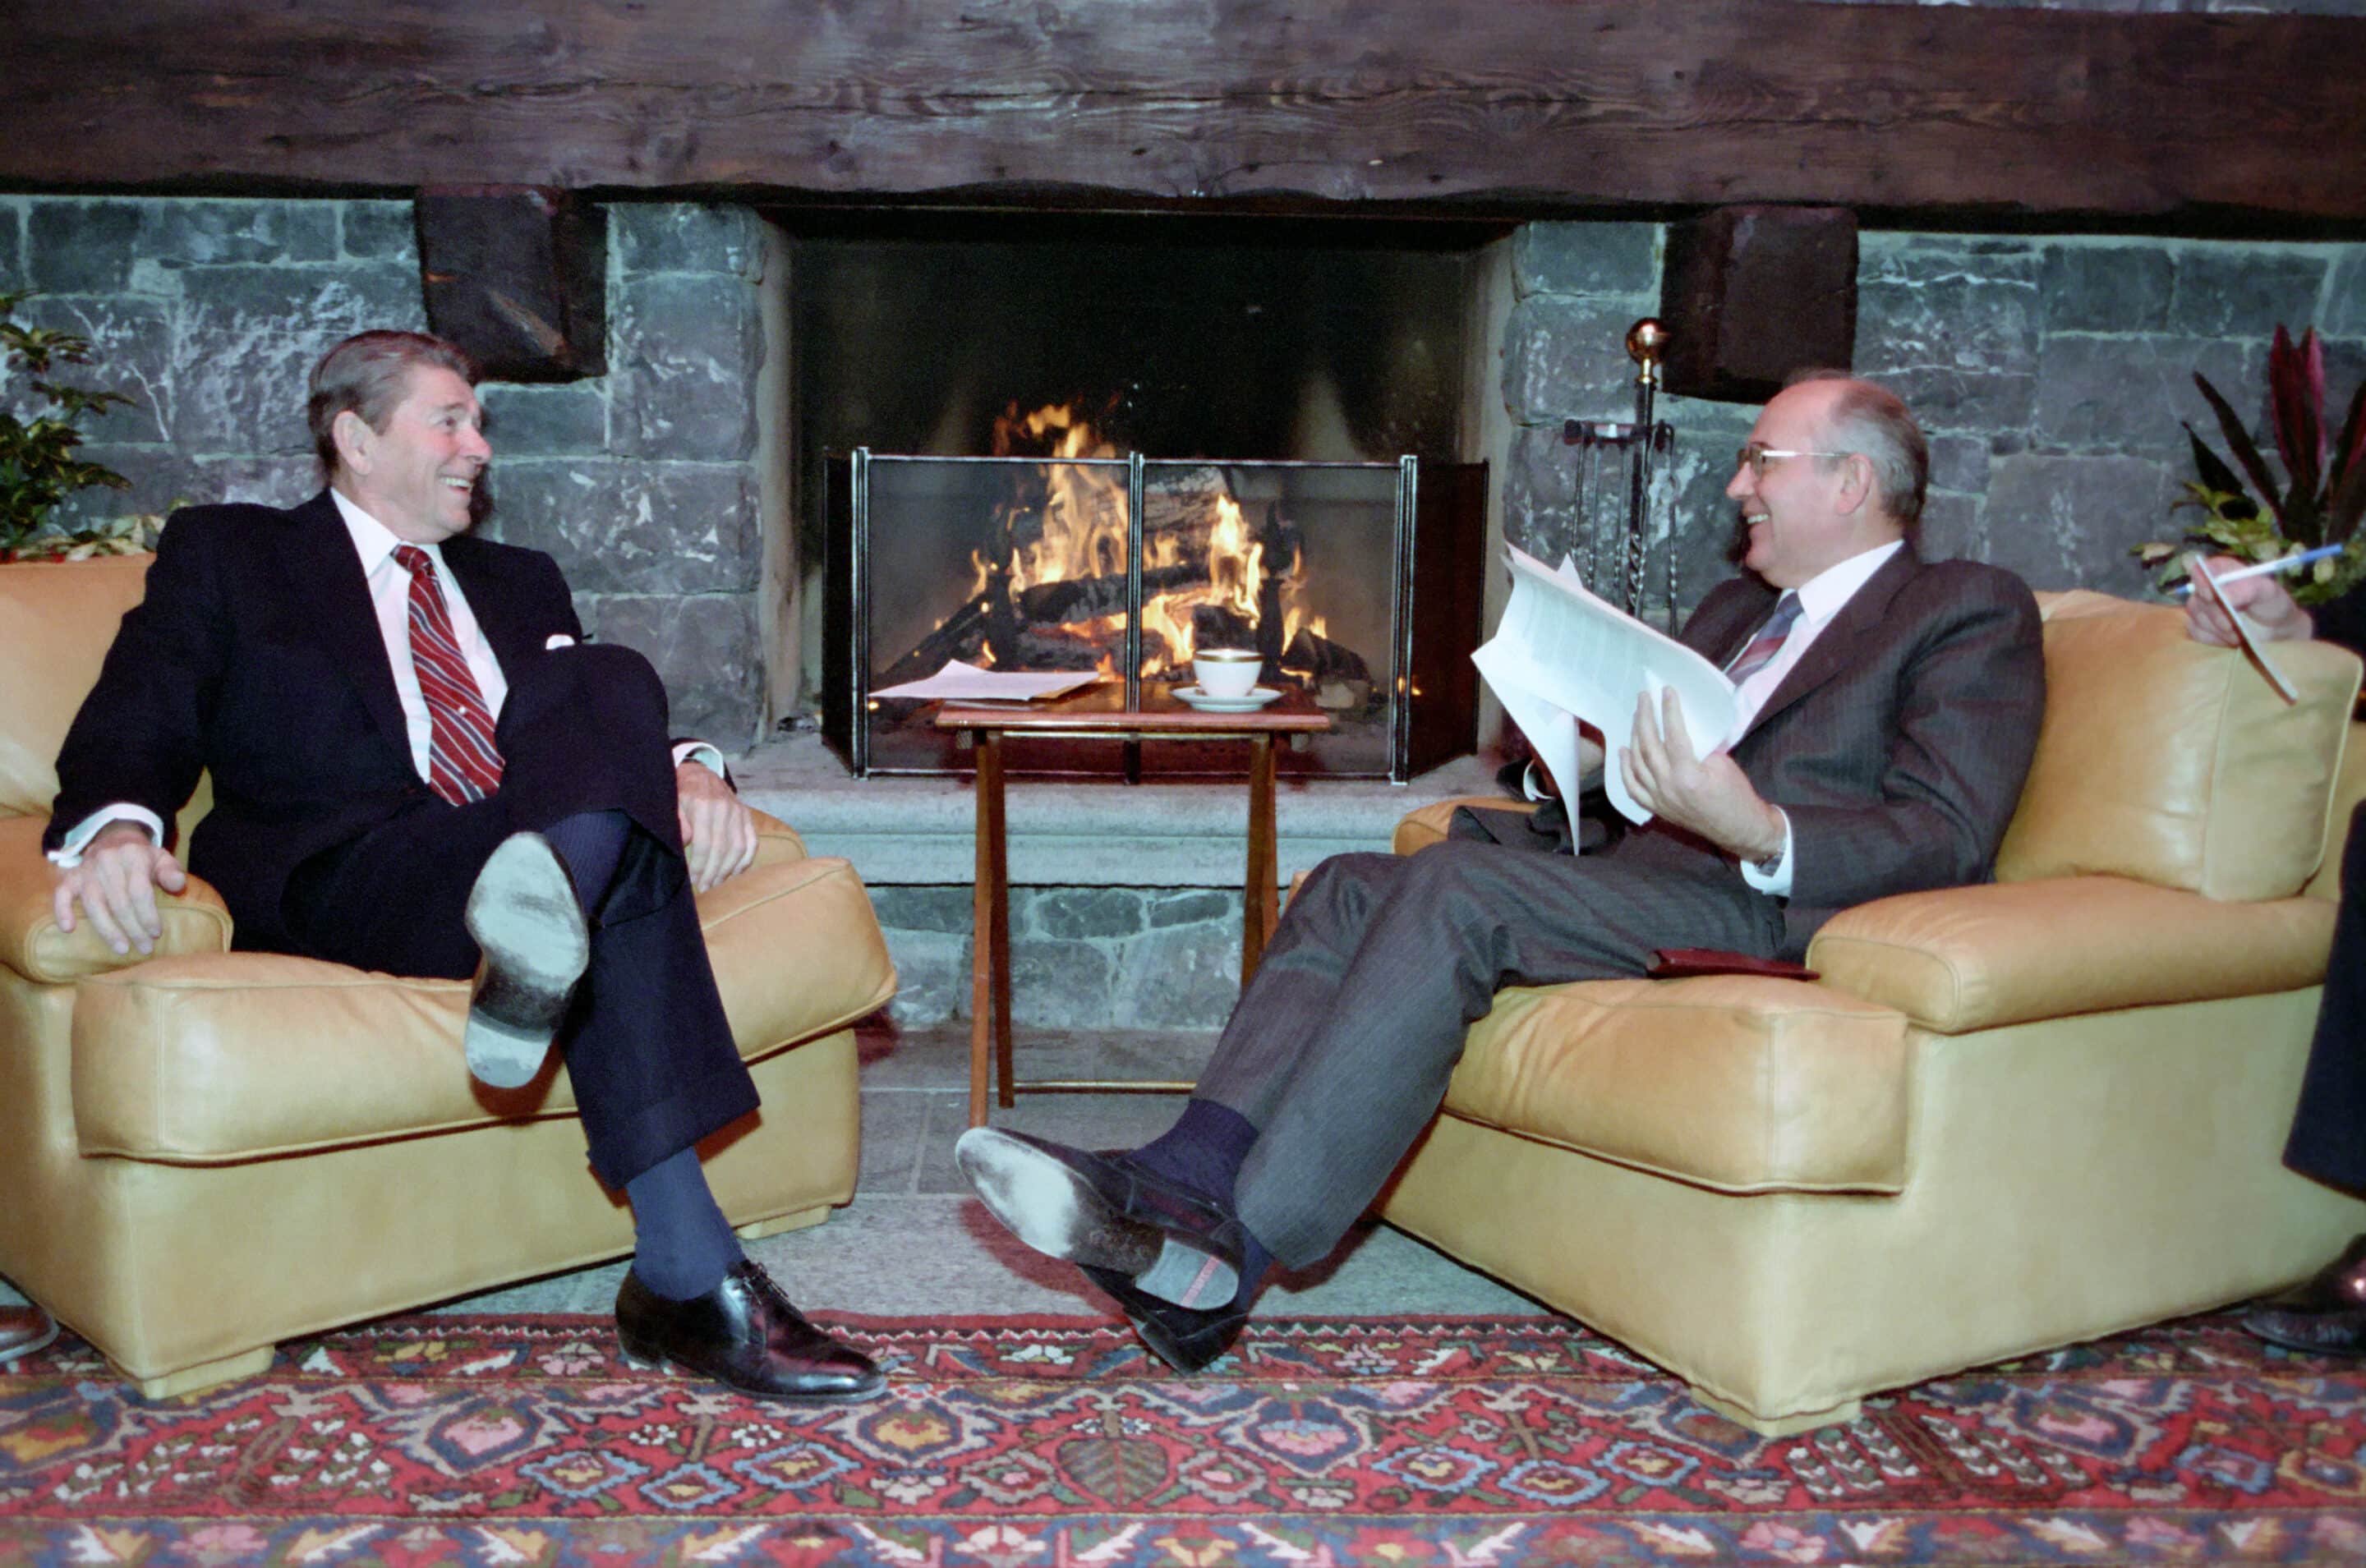 11/19/1985 President Reagan and Soviet General Secretary Gorbachev at the first Summit in Geneva Switzerland